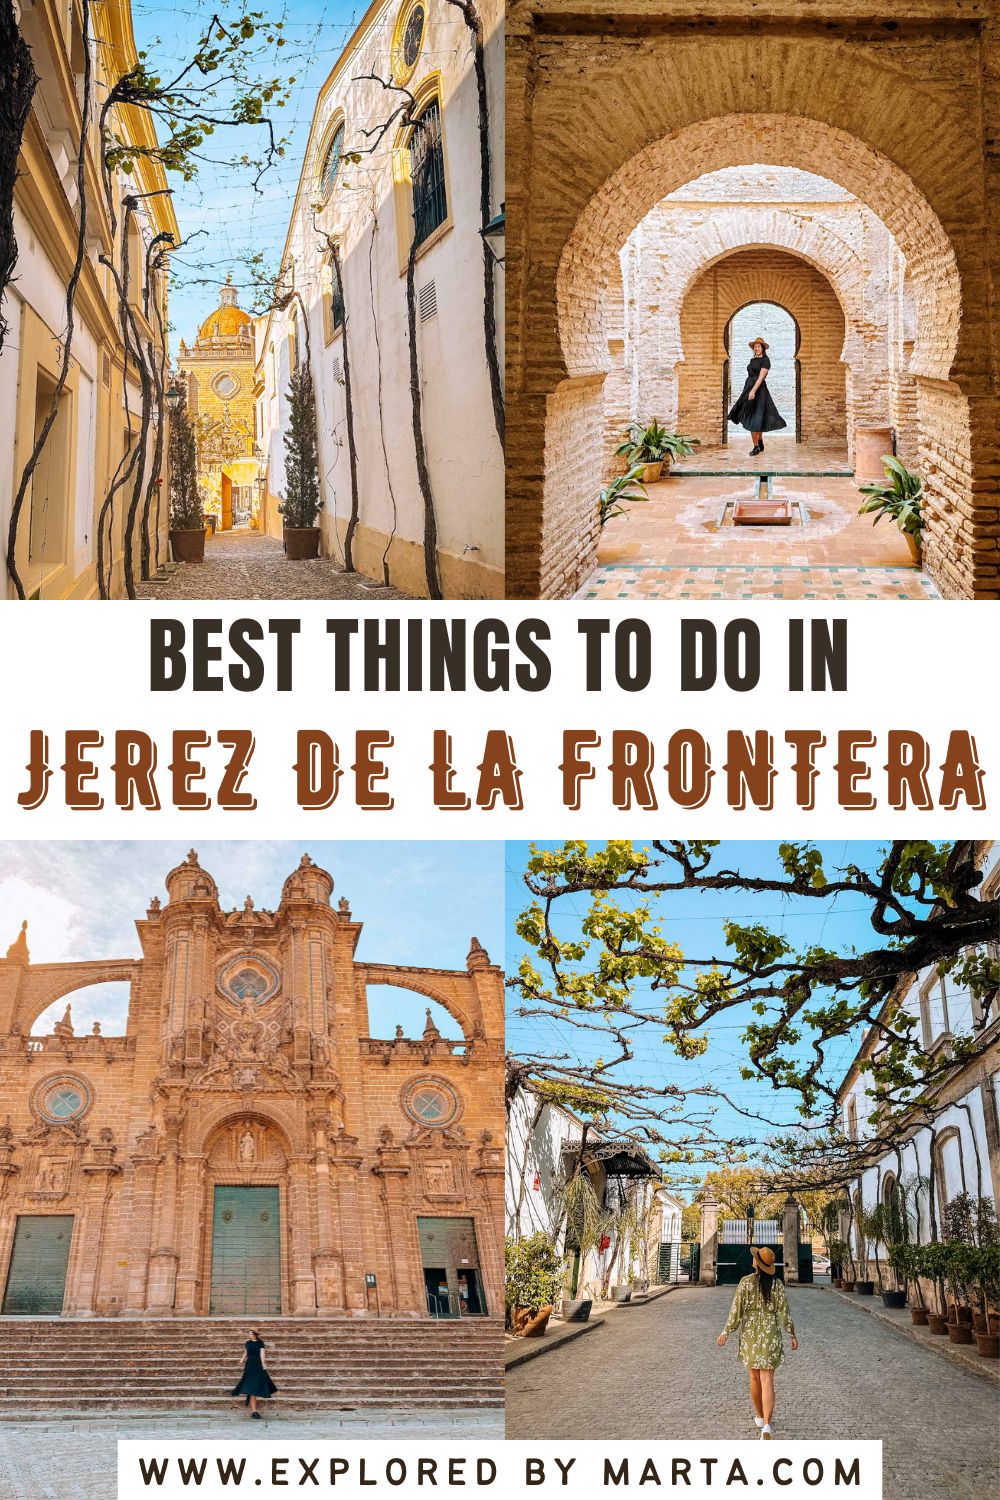 Amazing things you can do in Jerez de la Frontera